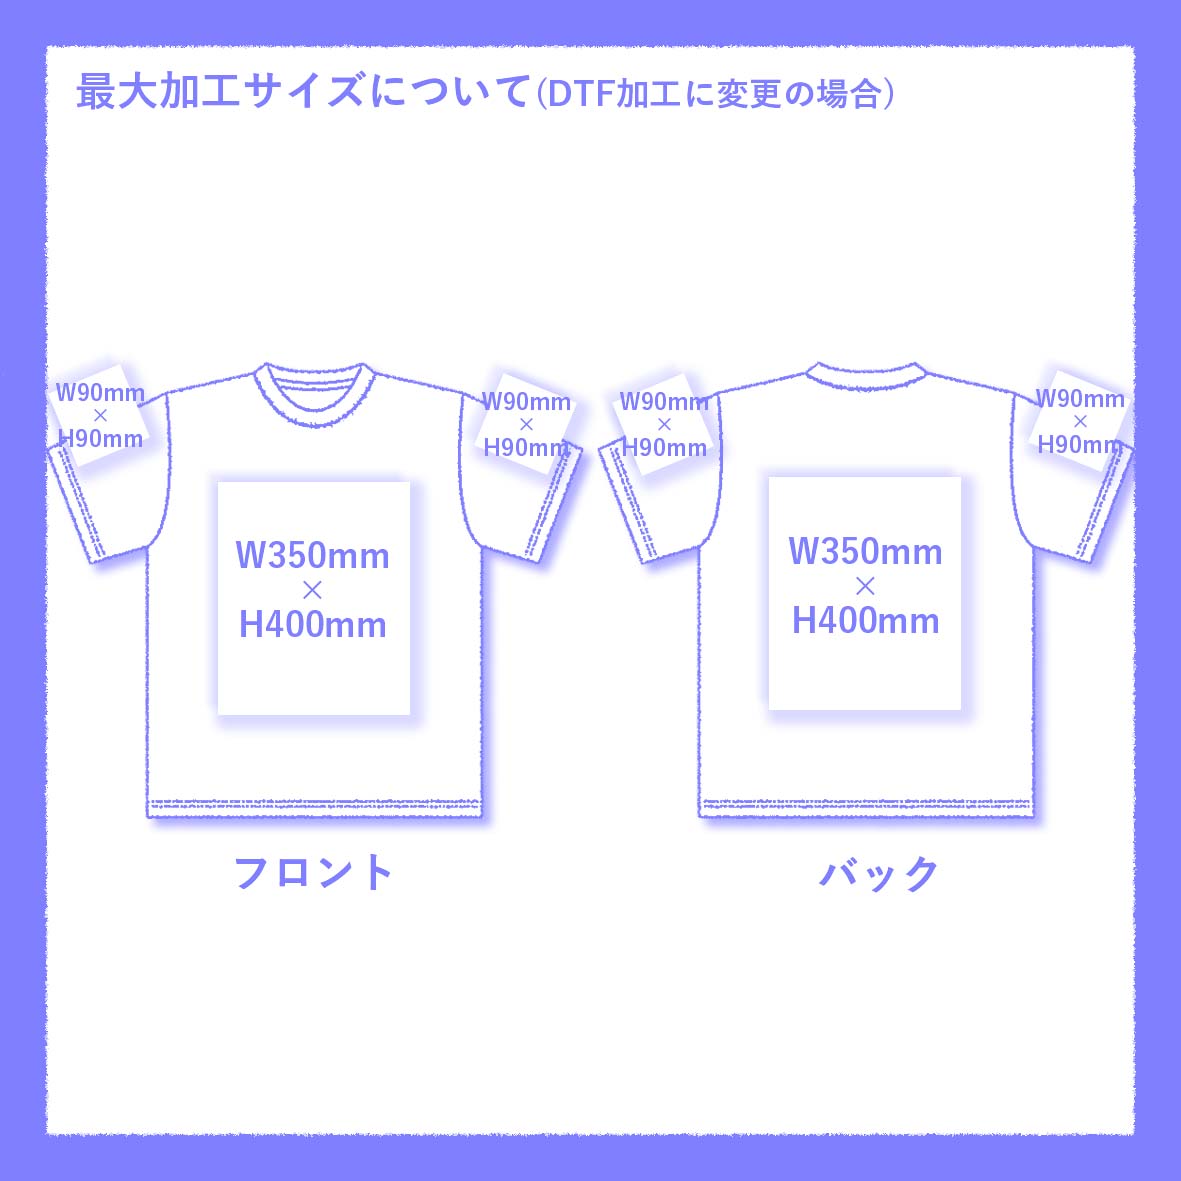 GILDAN ギルダン 5.3 oz ジャパンフィット プレミアムコットン リングスパンTシャツ (品番76000)